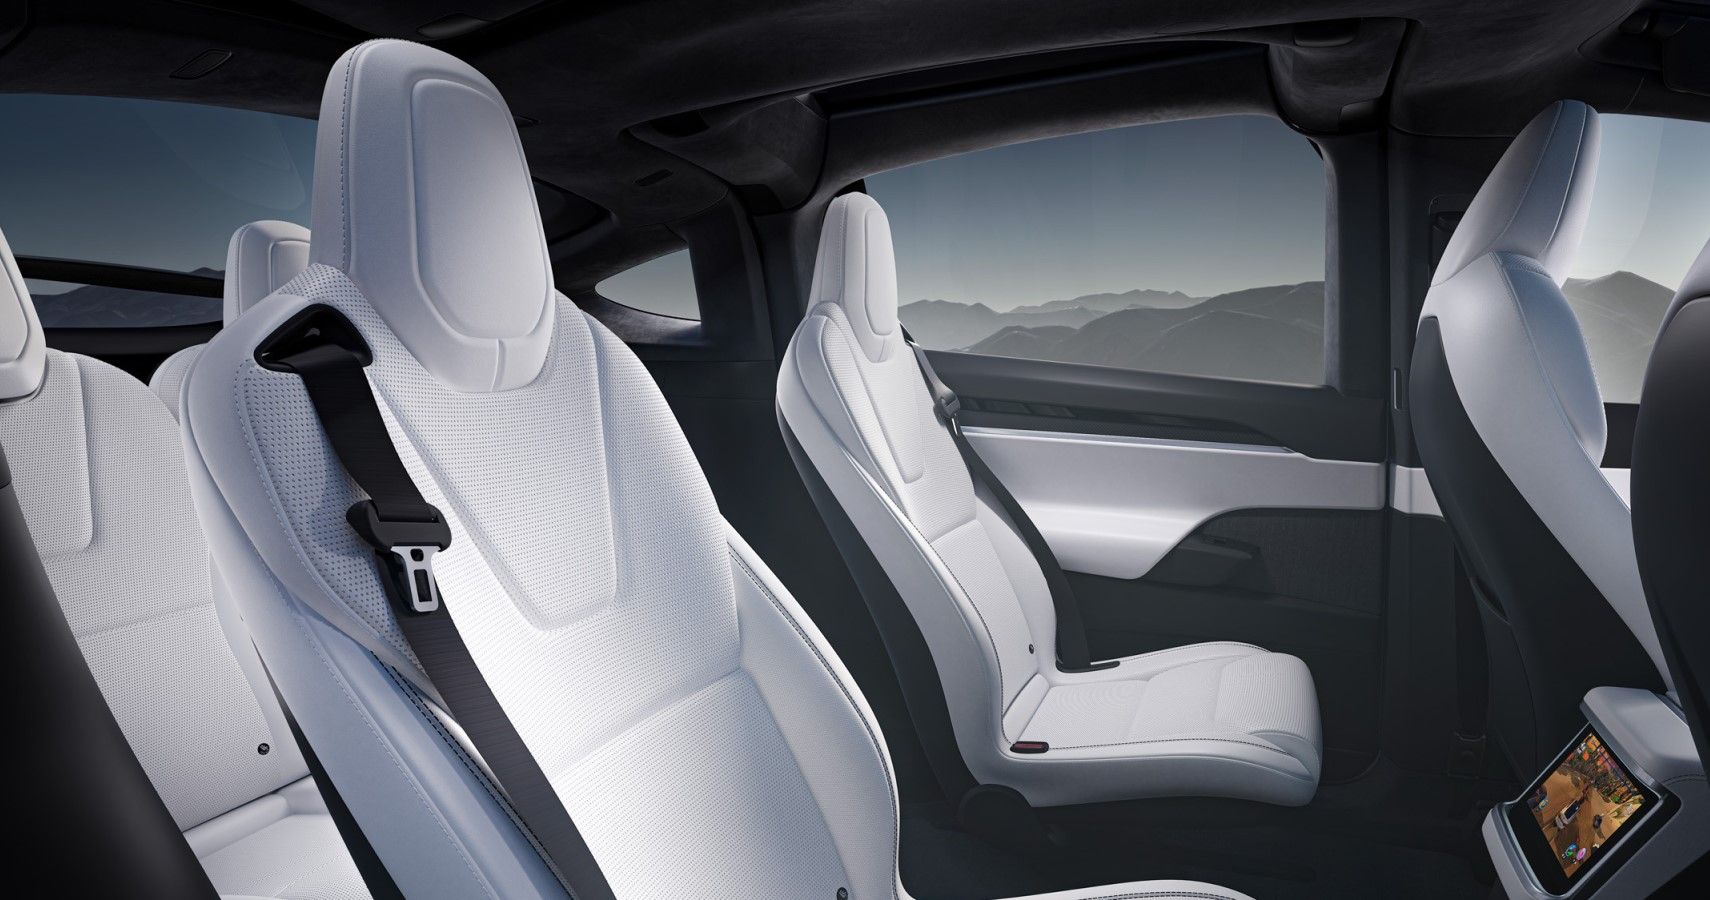 2022 Tesla Model X Plaid seating layout view